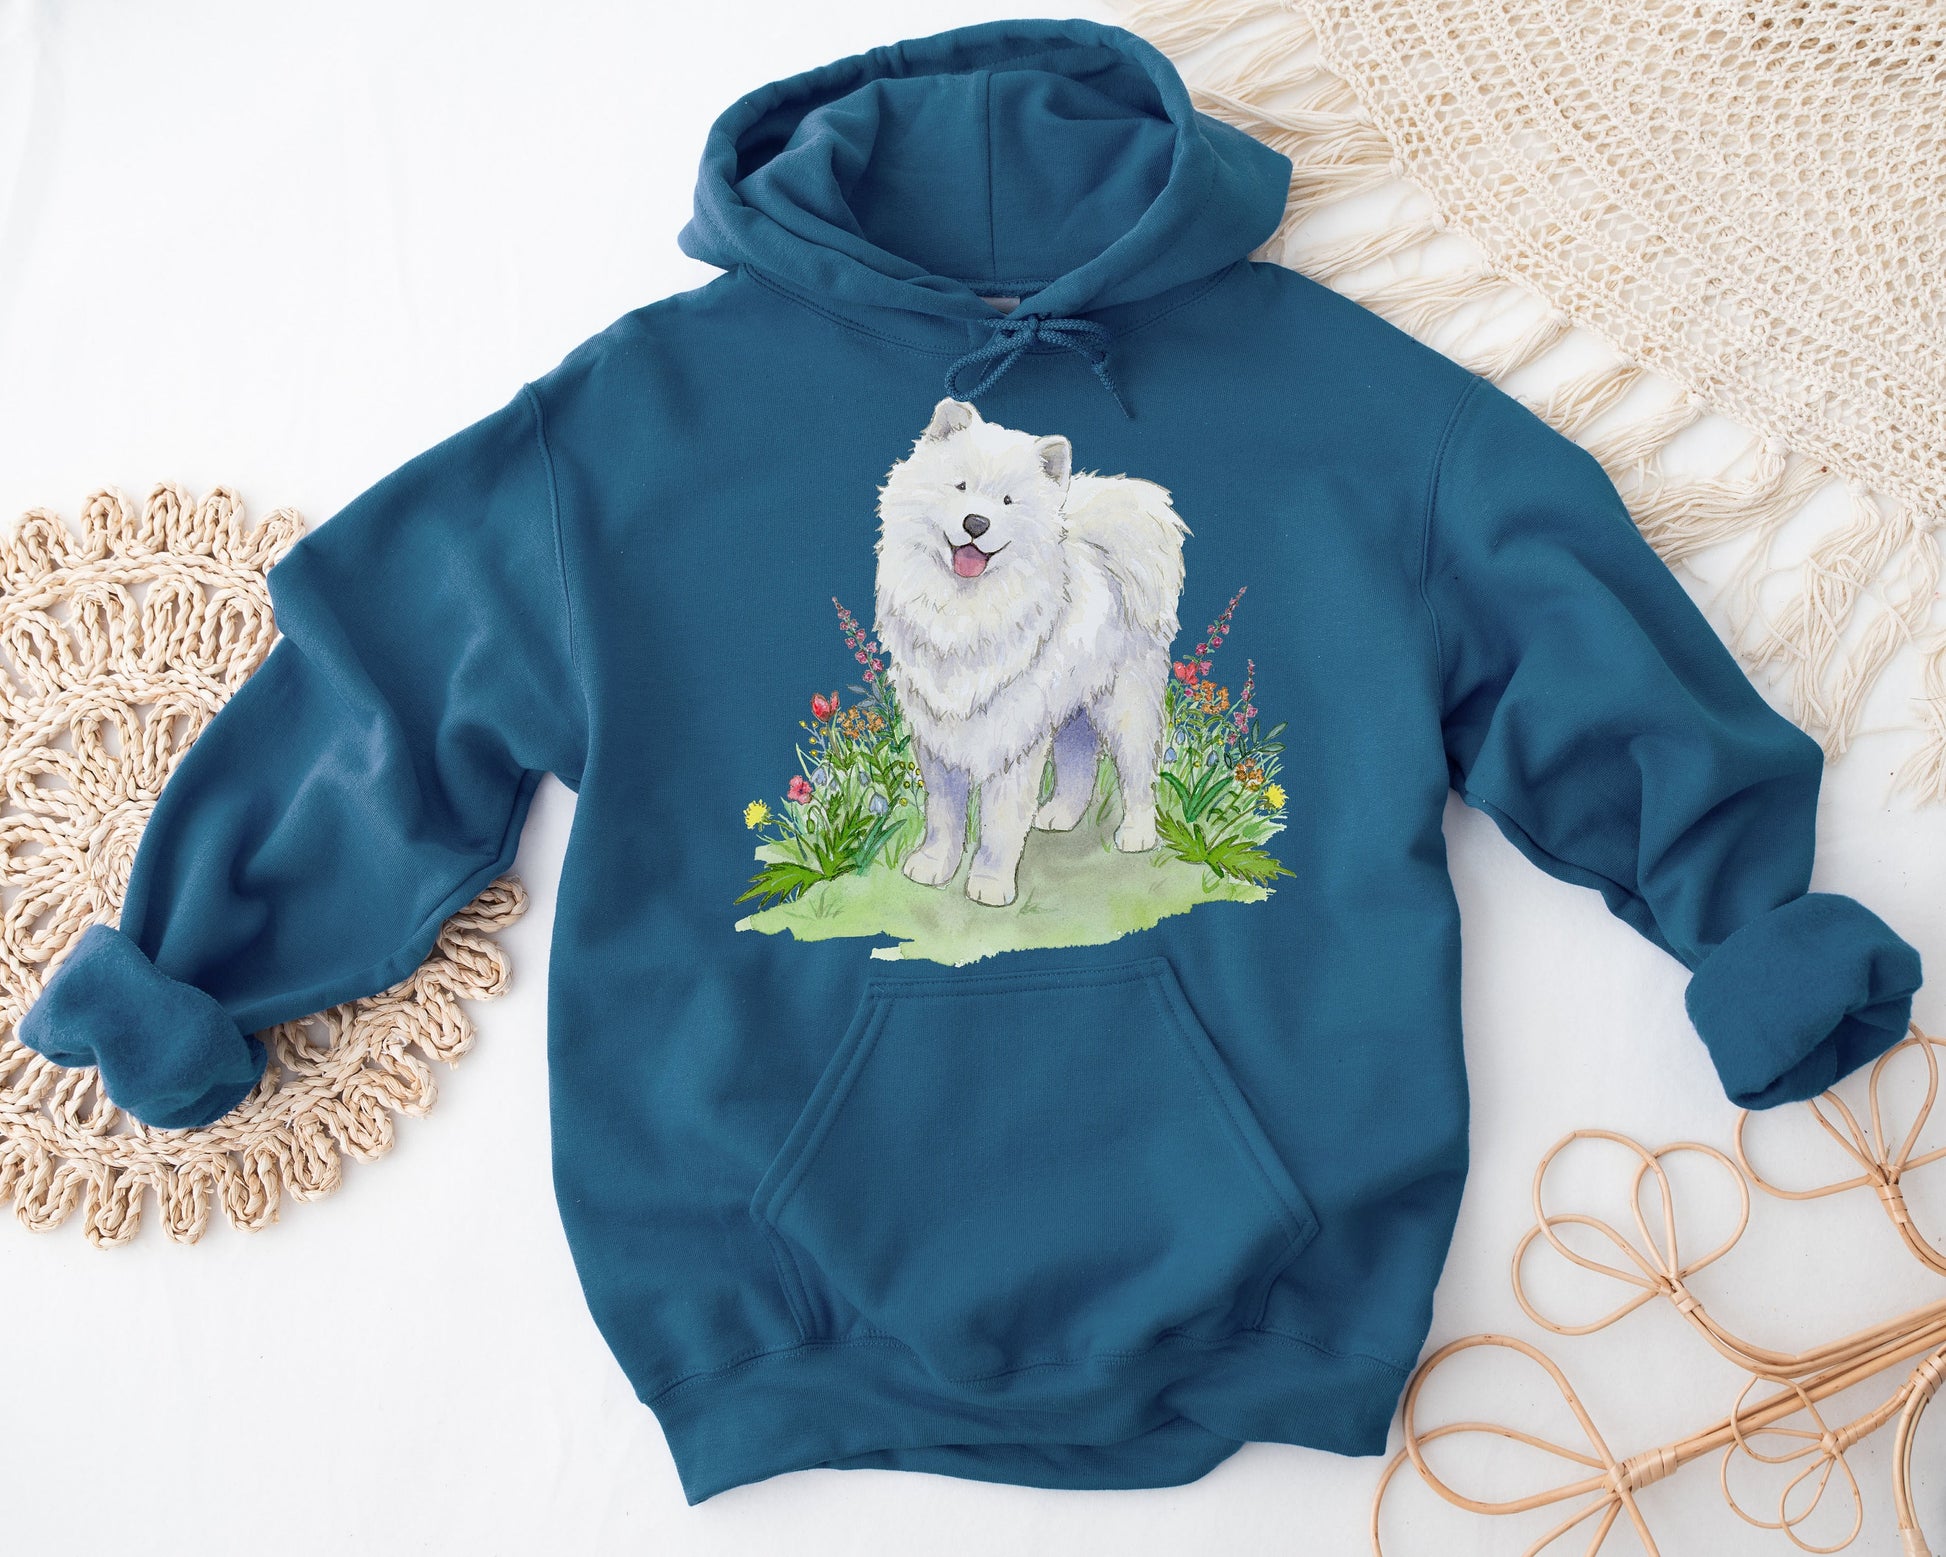 Dark Blue hooded sweatshirt with cute artwork of samoyed dog and wildflowers